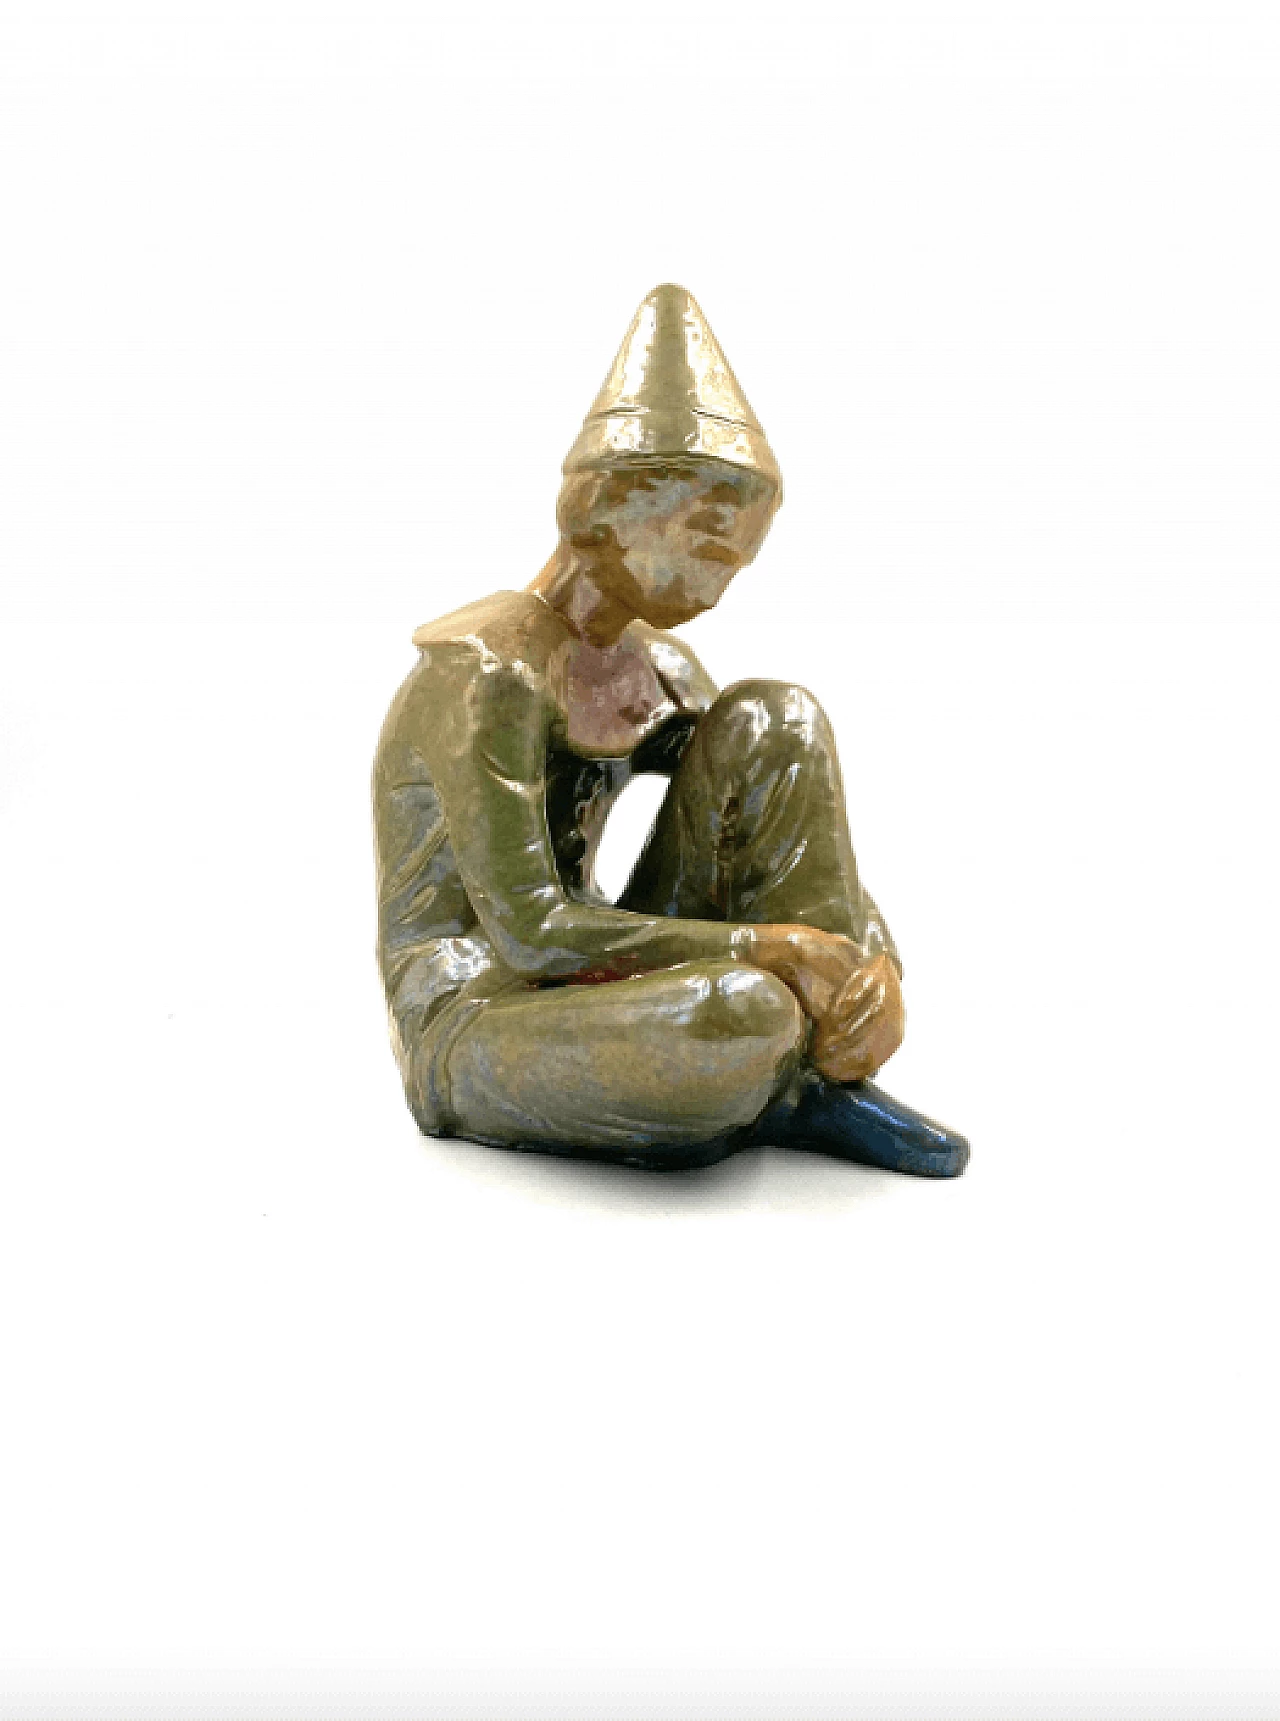 Giordano Tronconi, Seated boy, green ceramic figure from Faenza, 1950s 58